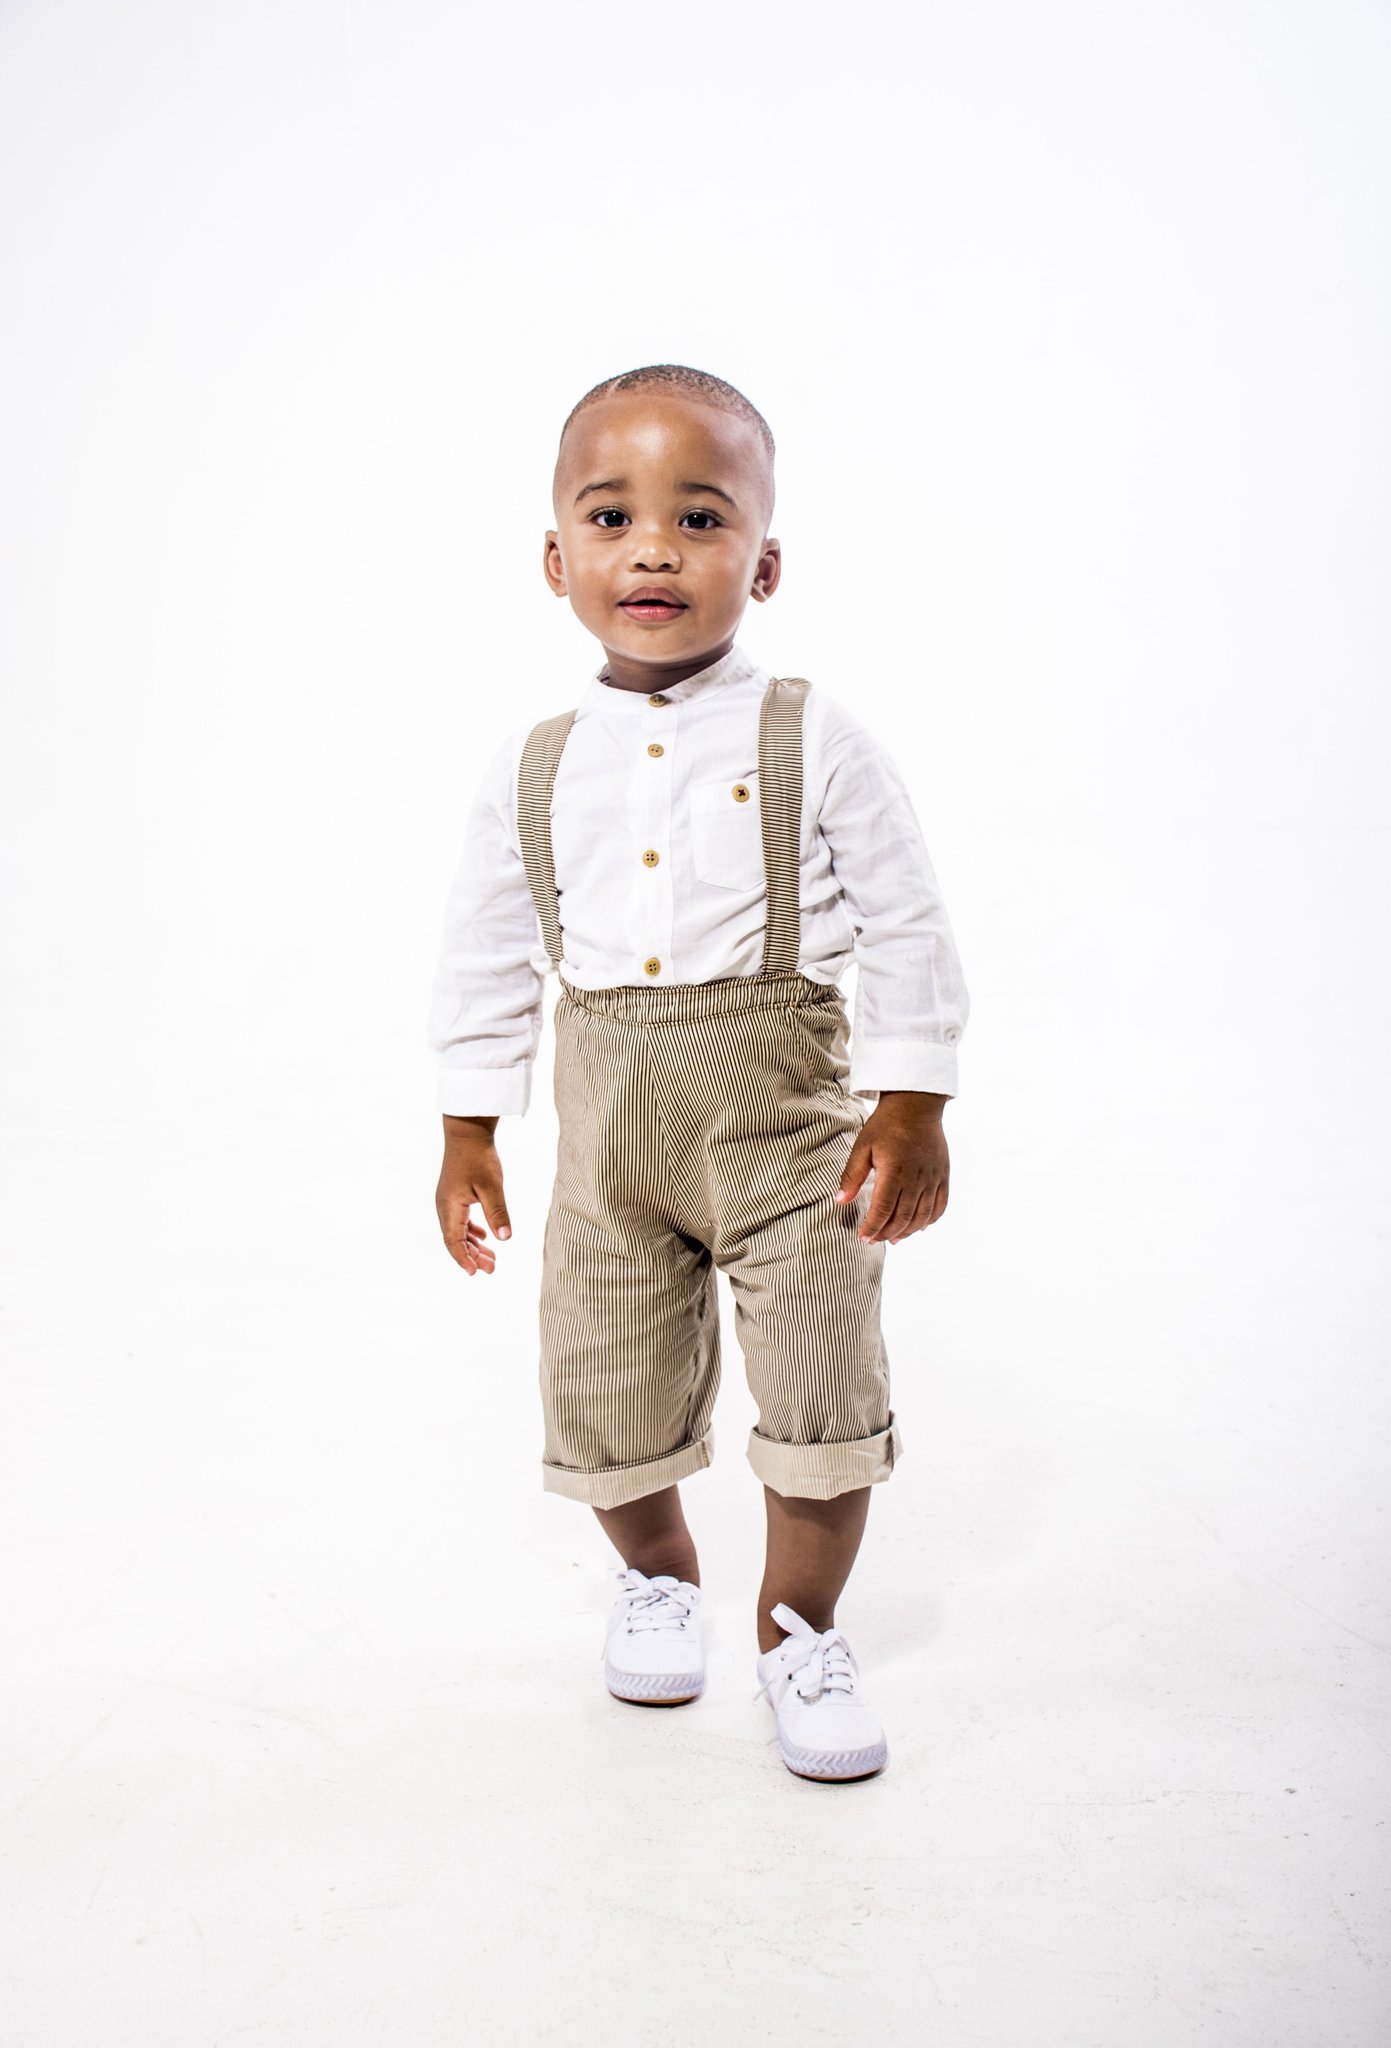 Baby Makhosini launches online kiddies apparel (Photos)